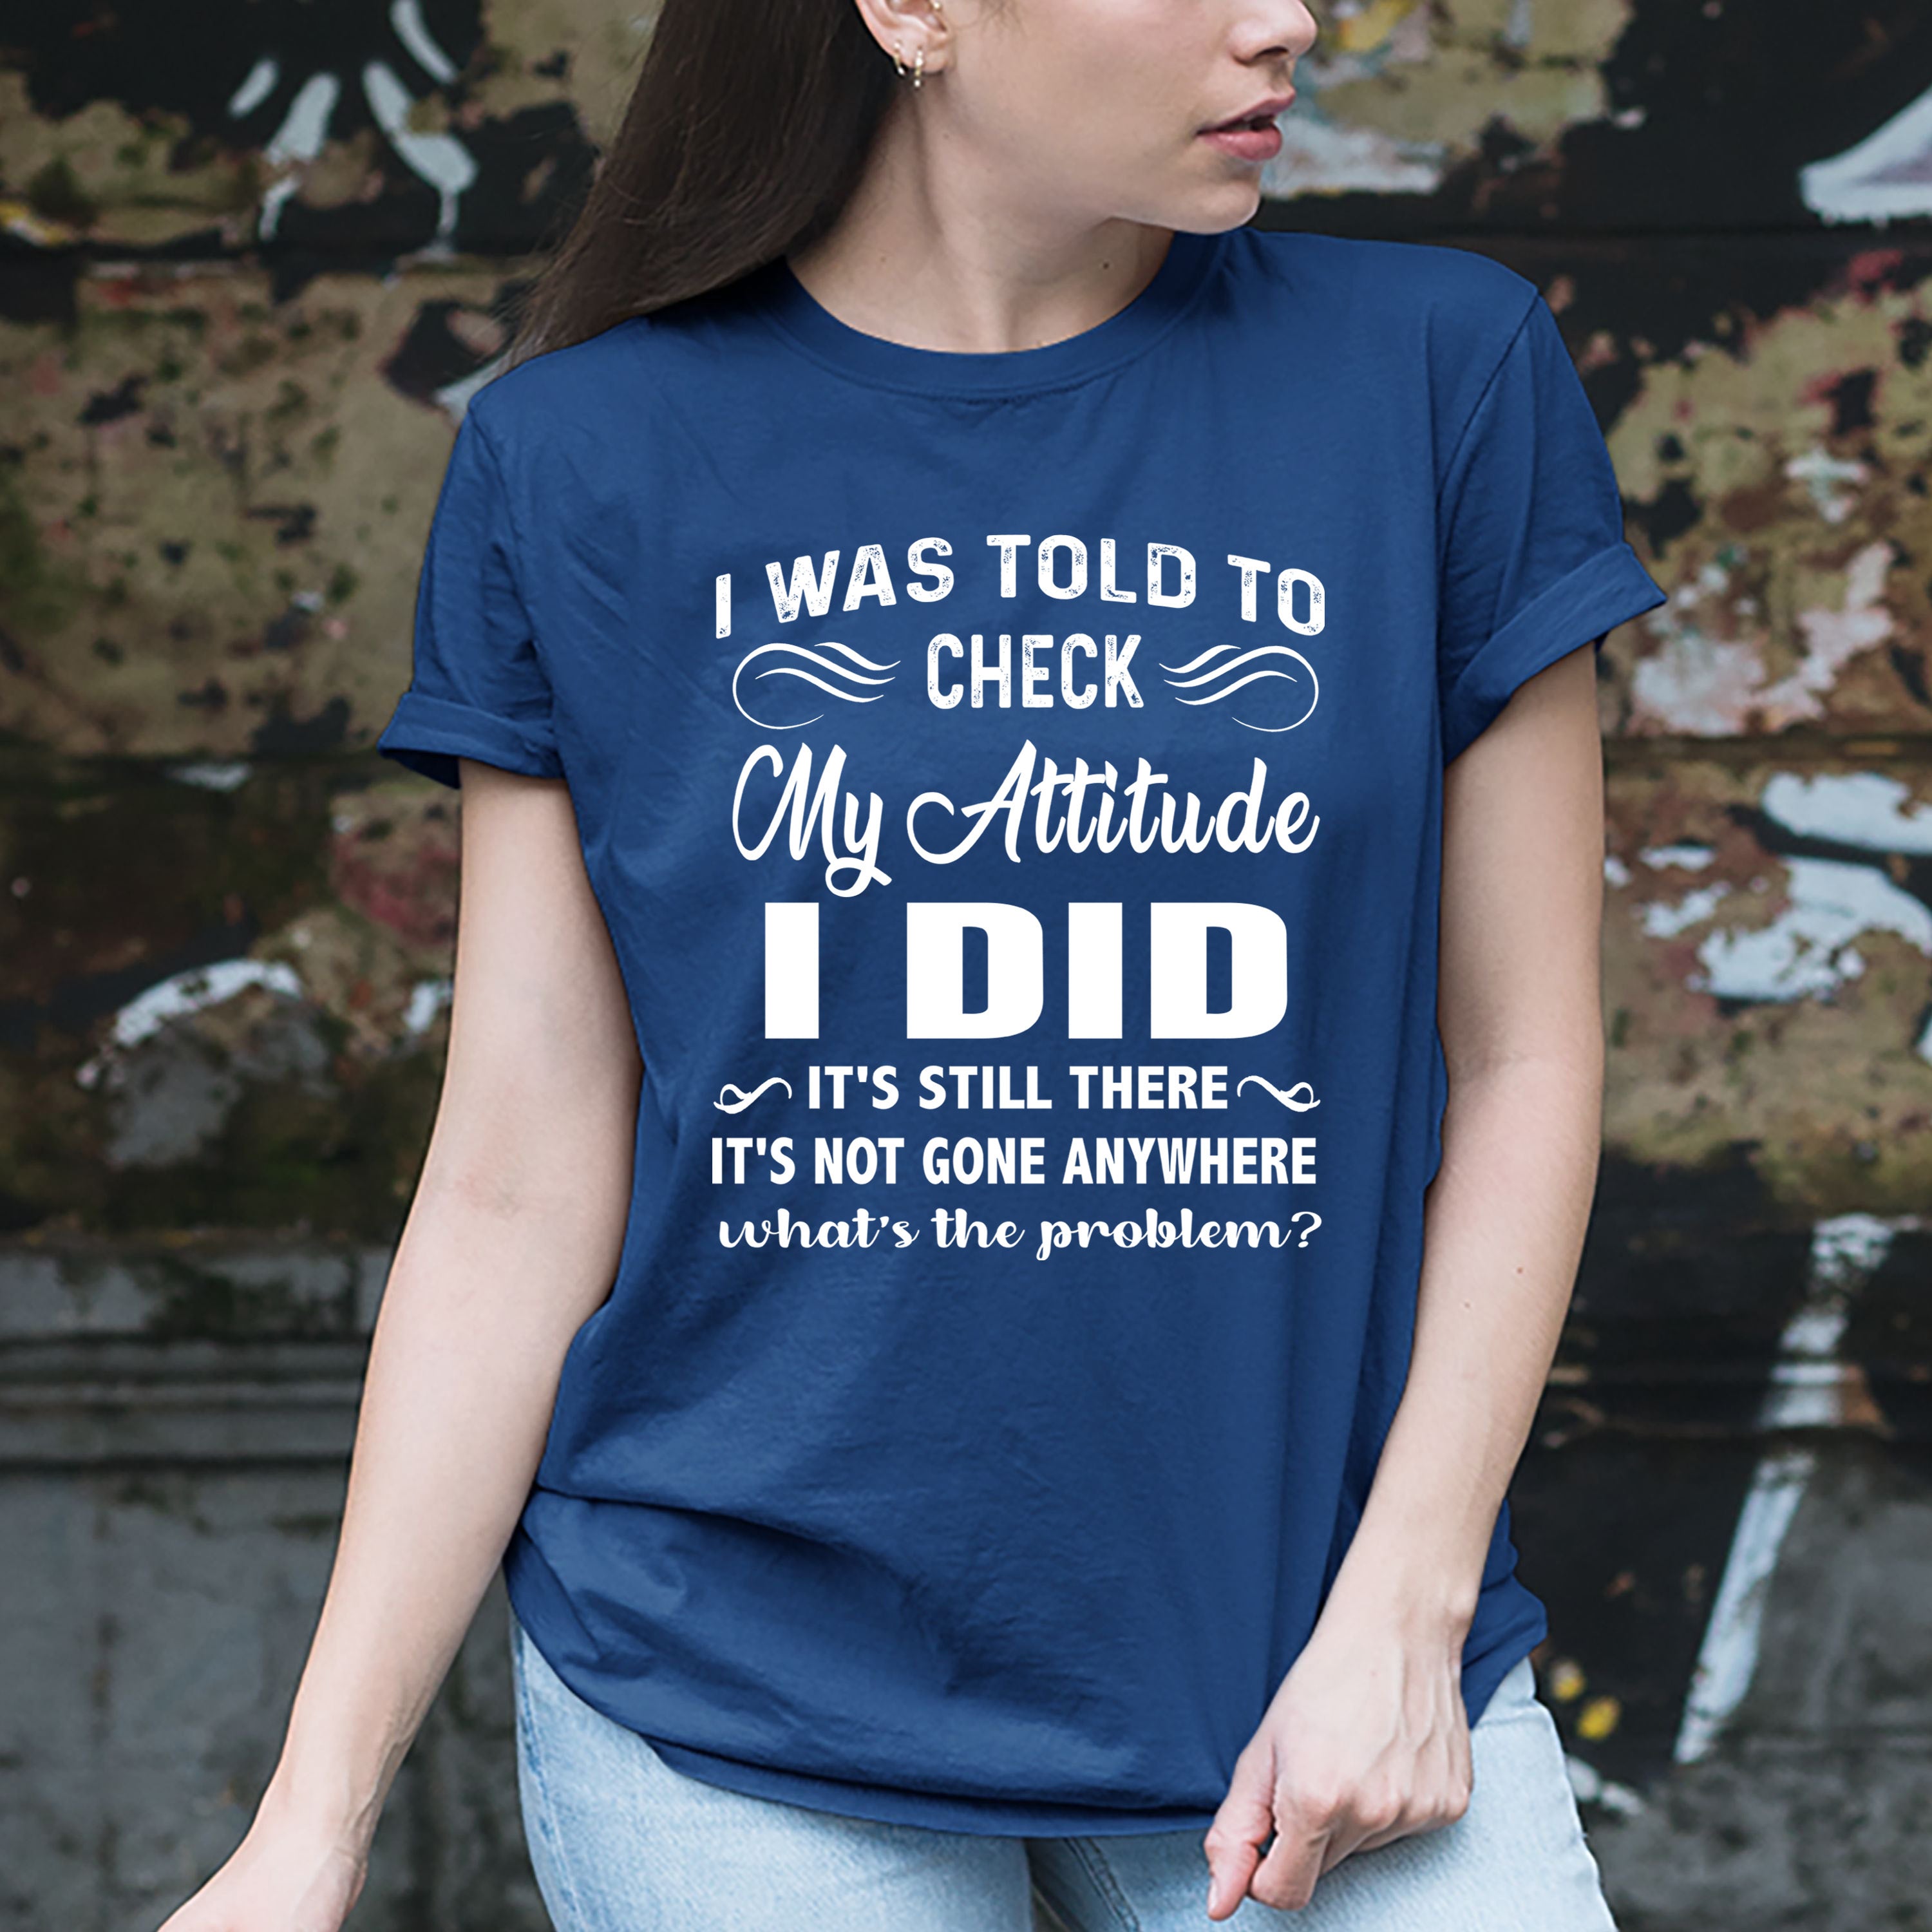 "CHECK MY ATTITUDE I DID" T-shirt